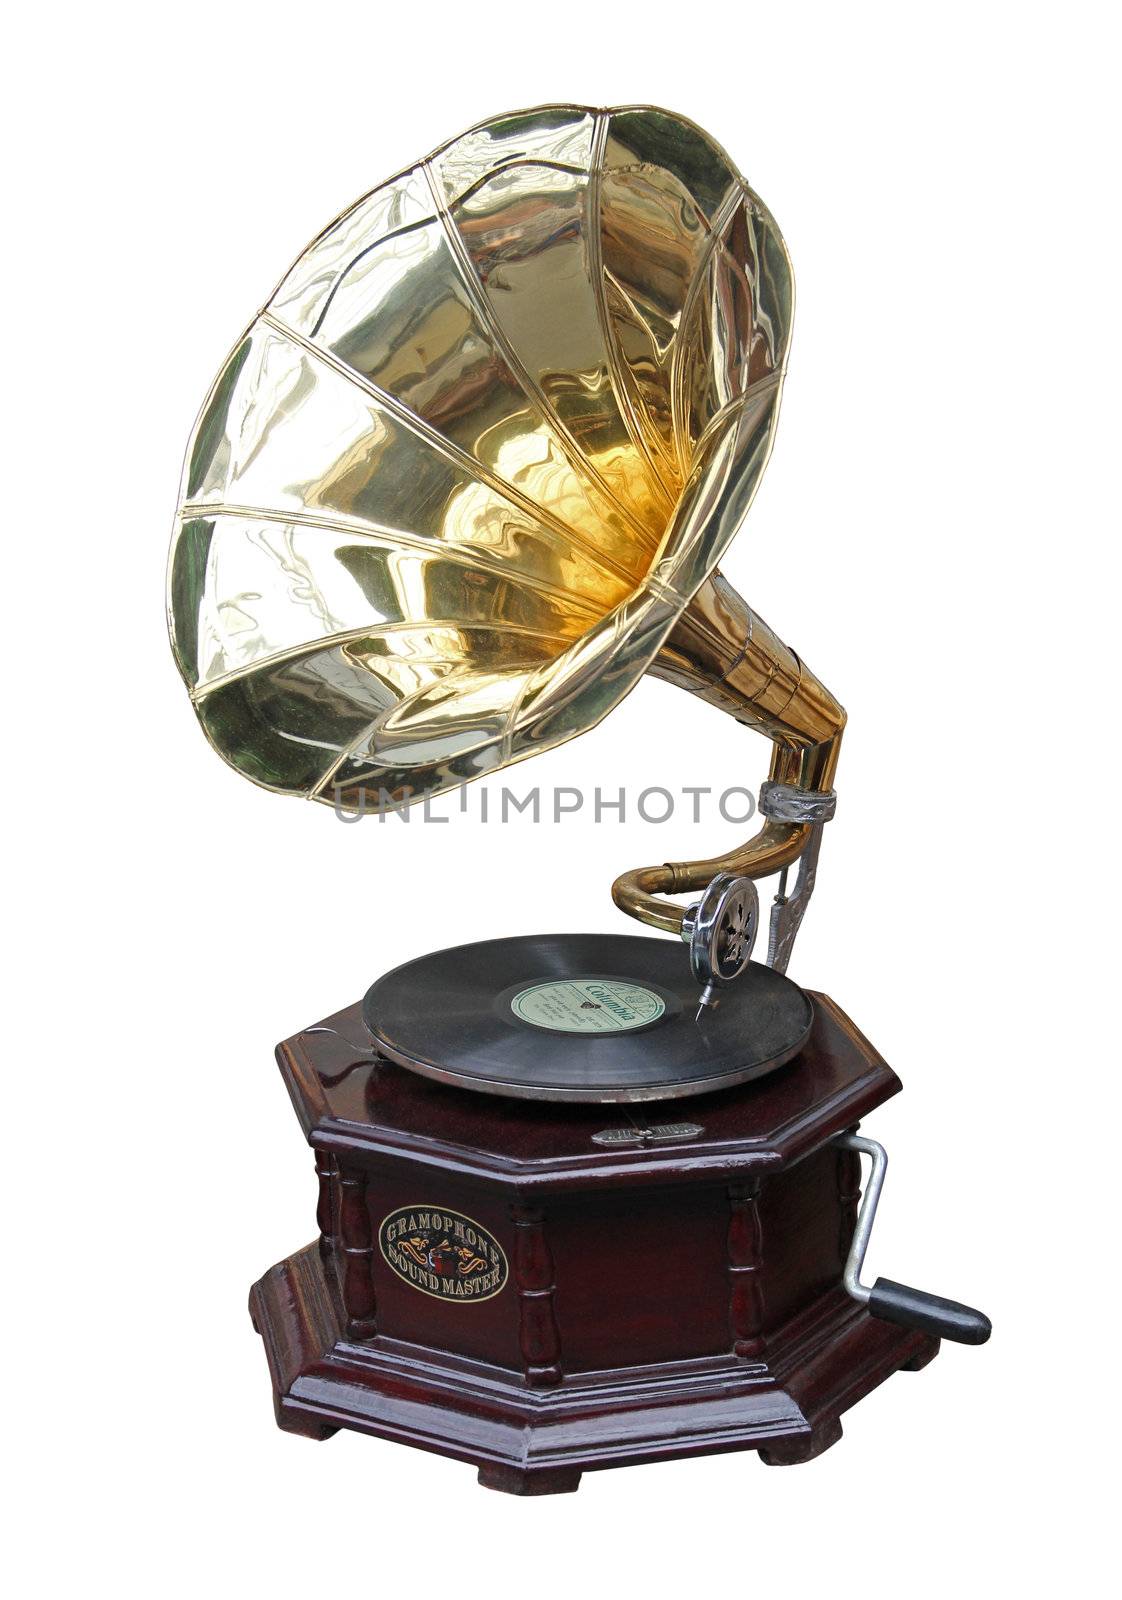 phonograph by gallofoto